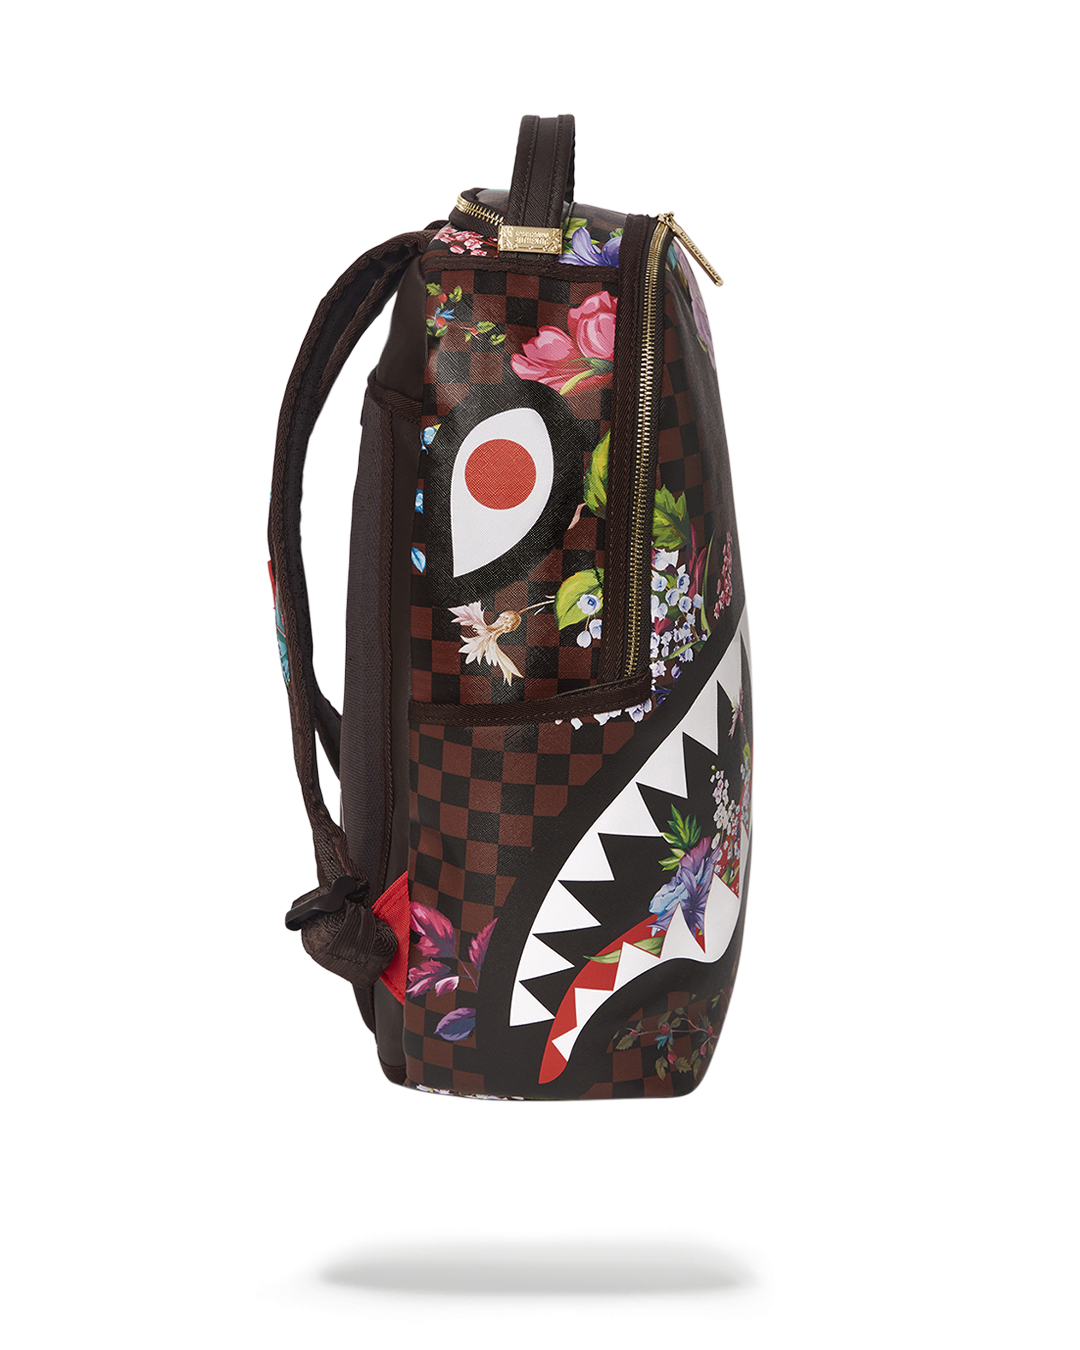 Sprayground, Bags, Limited Edition Garden Shark Spray Ground Backpack